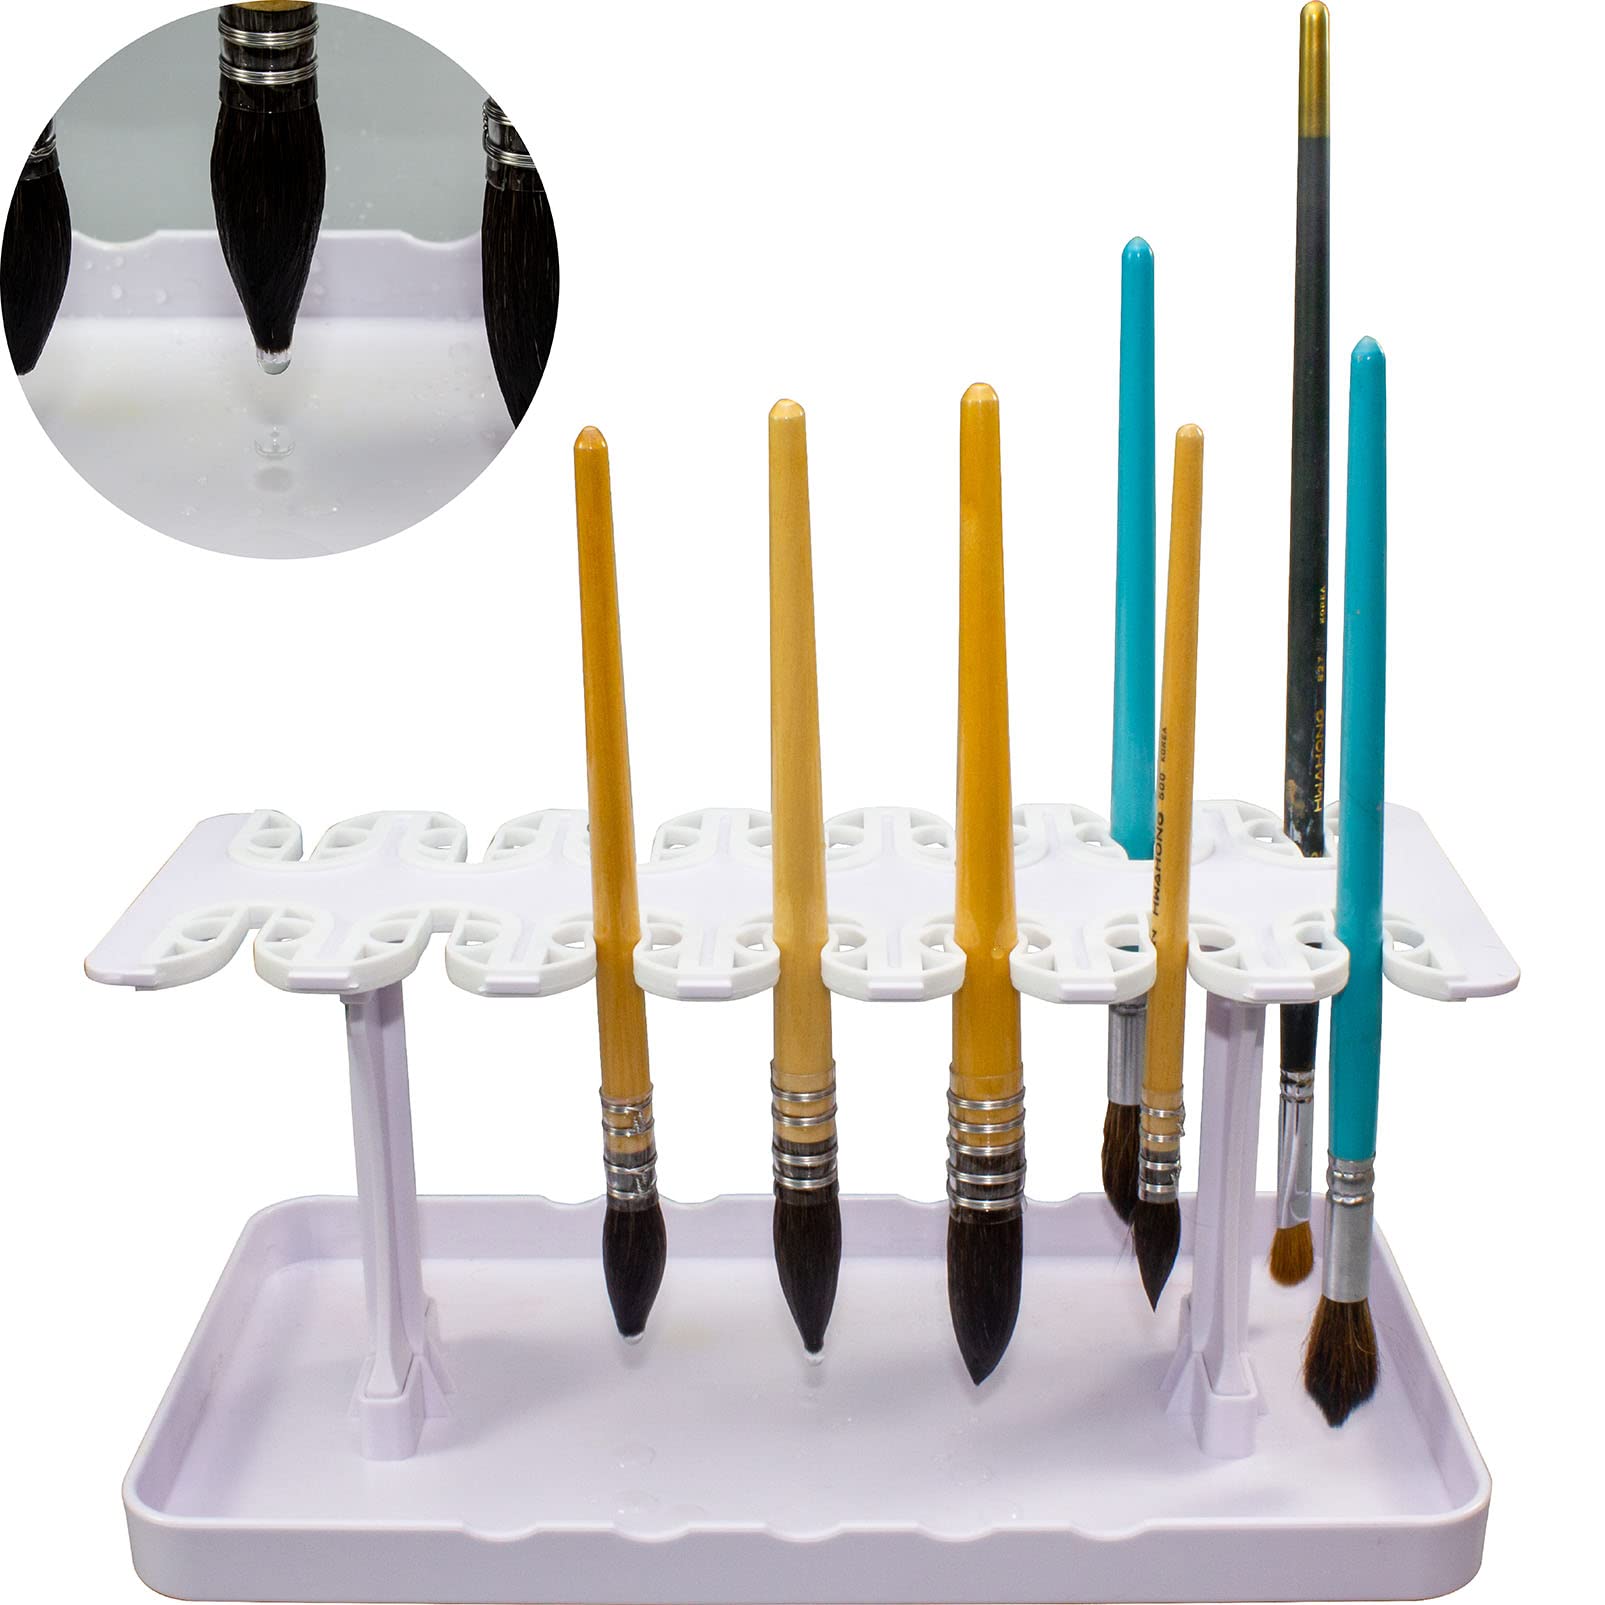 CUGEBANNA Plastic Artist Multi Hole Paint Brush Drying Rack - Holds 14  Brushes Upright Paint Brush Holder